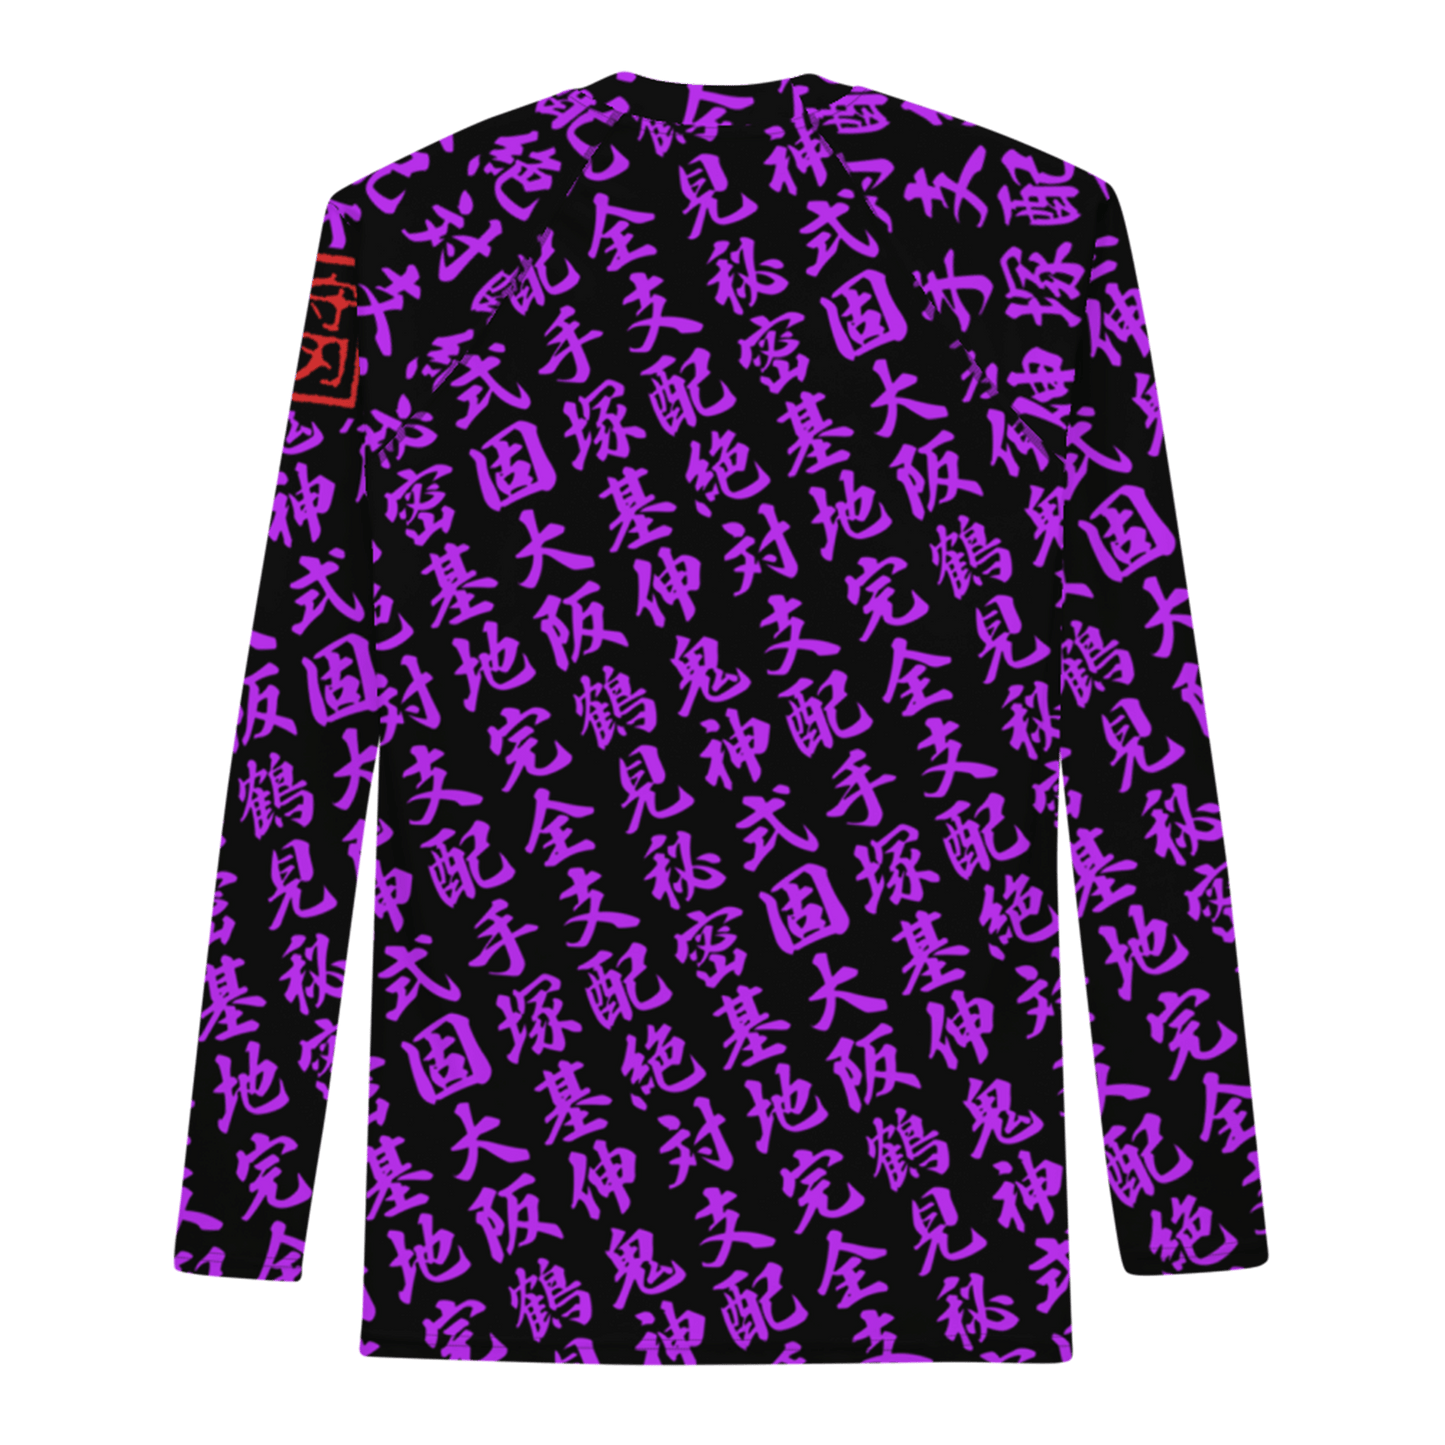 Men purple long sleeve rash guard with all-over print in Japanese KANJI